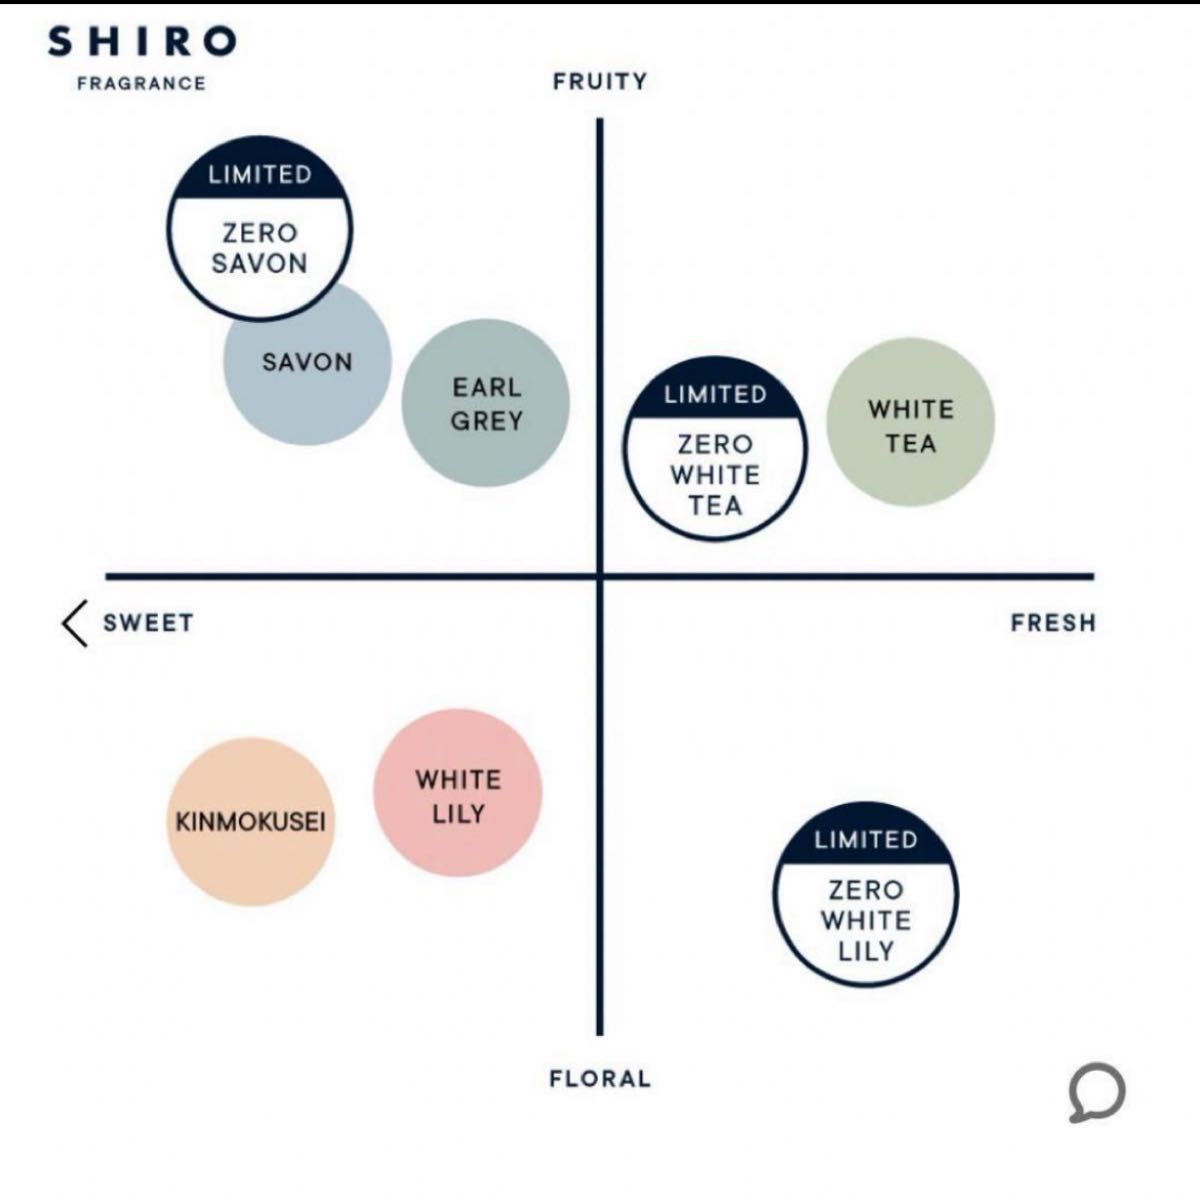 shiro シロ 新品 未使用 限定 ゼロサボン オードパルファン フレグランス オードパルファム